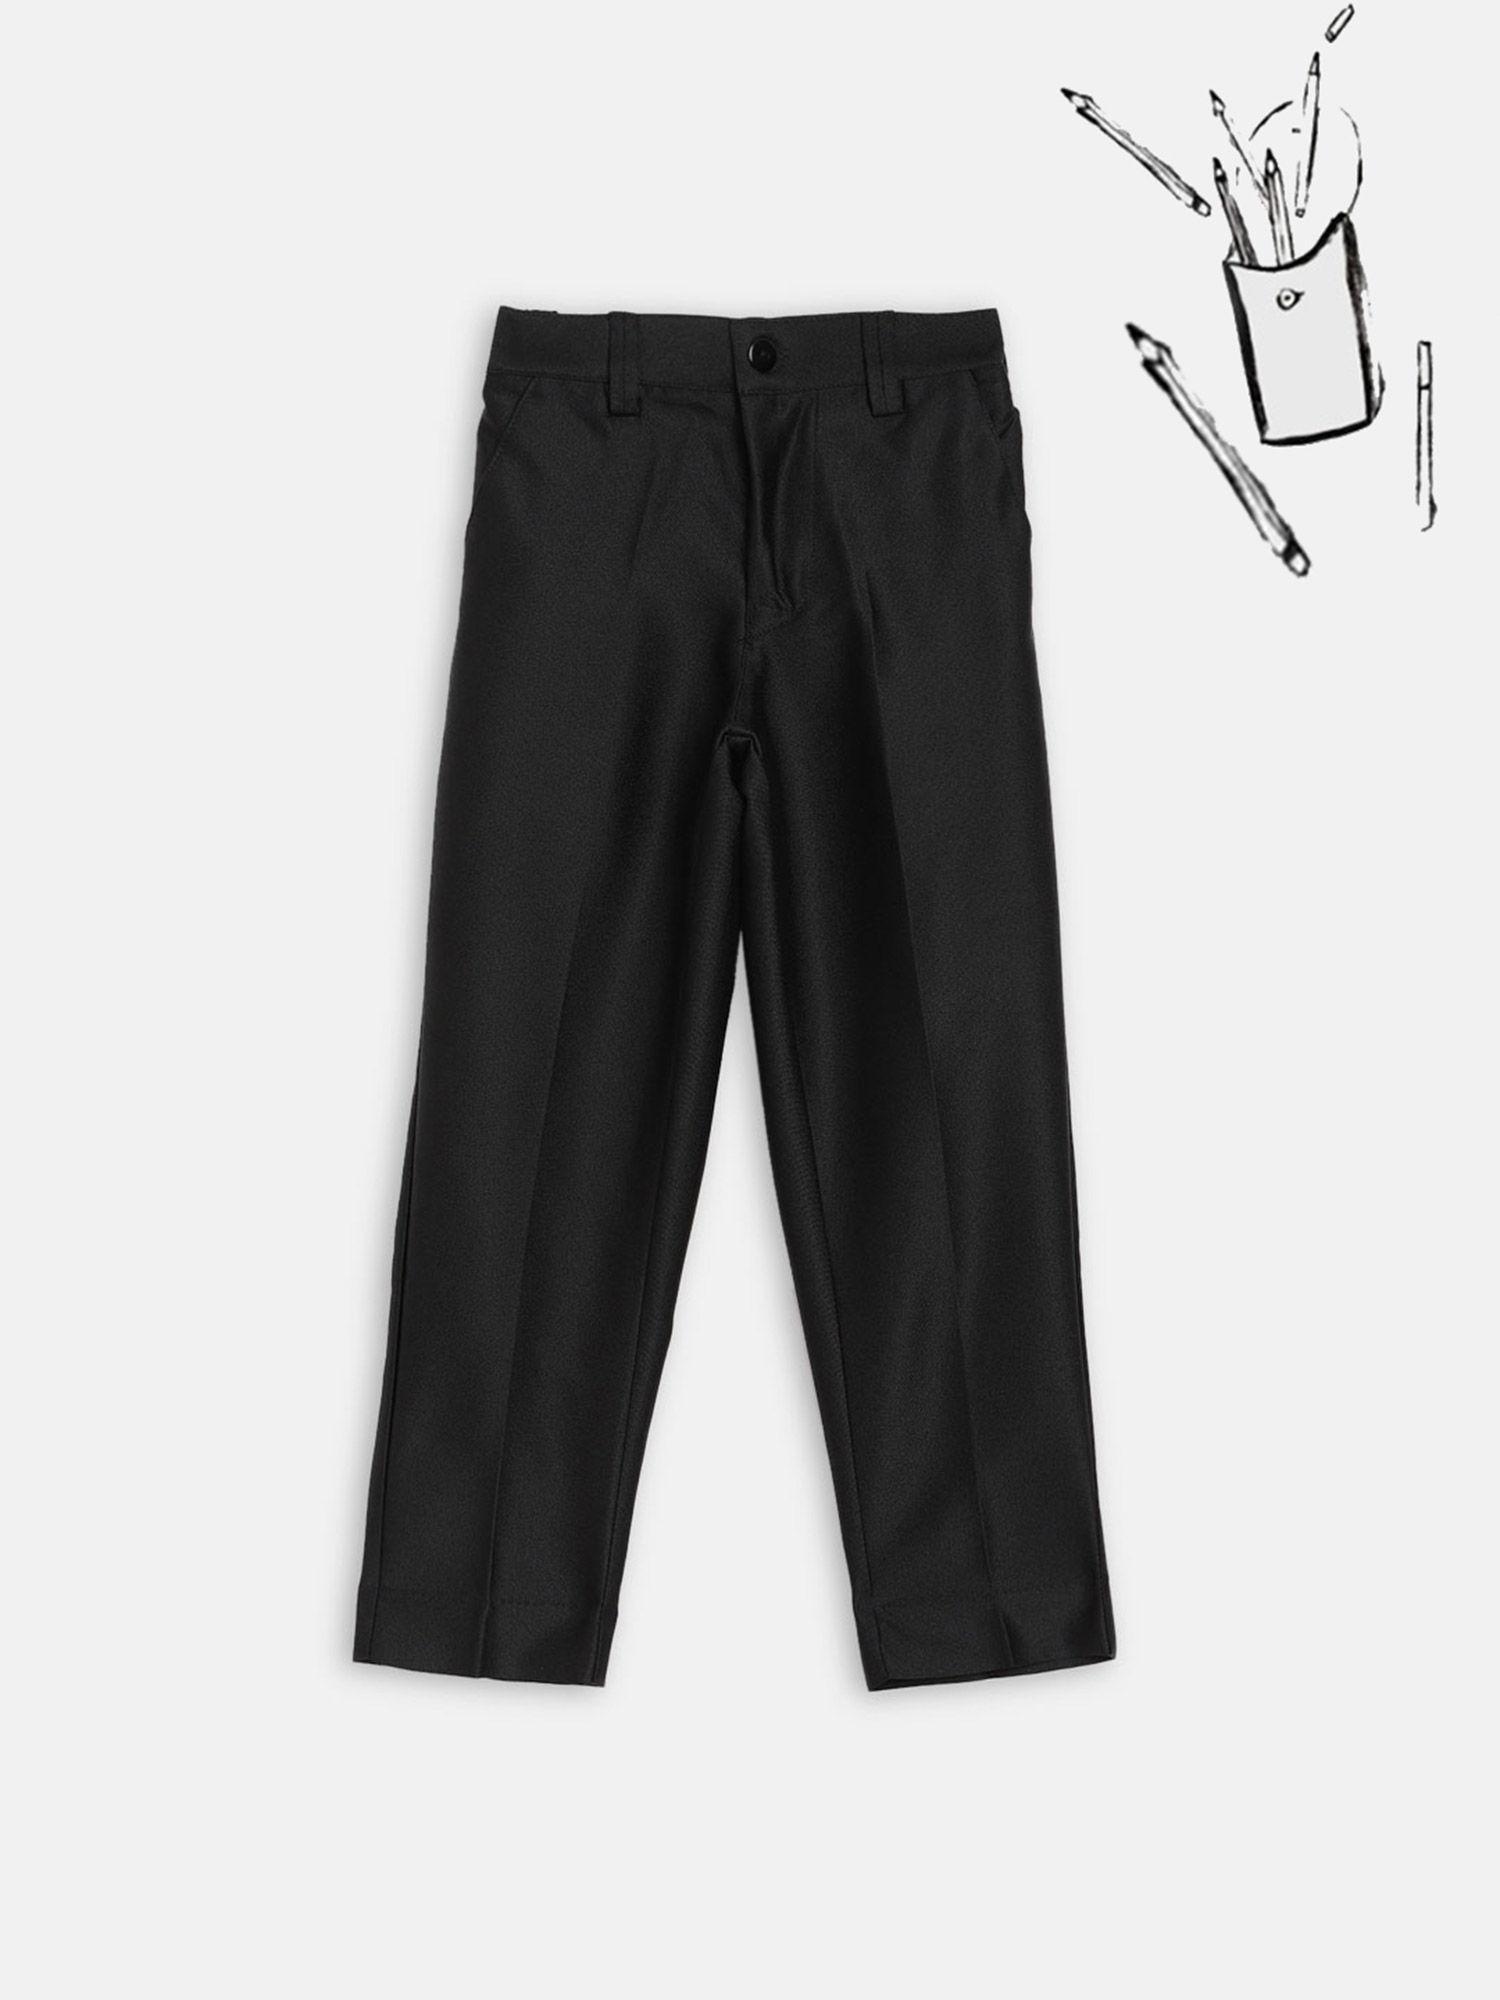 black solid trouser